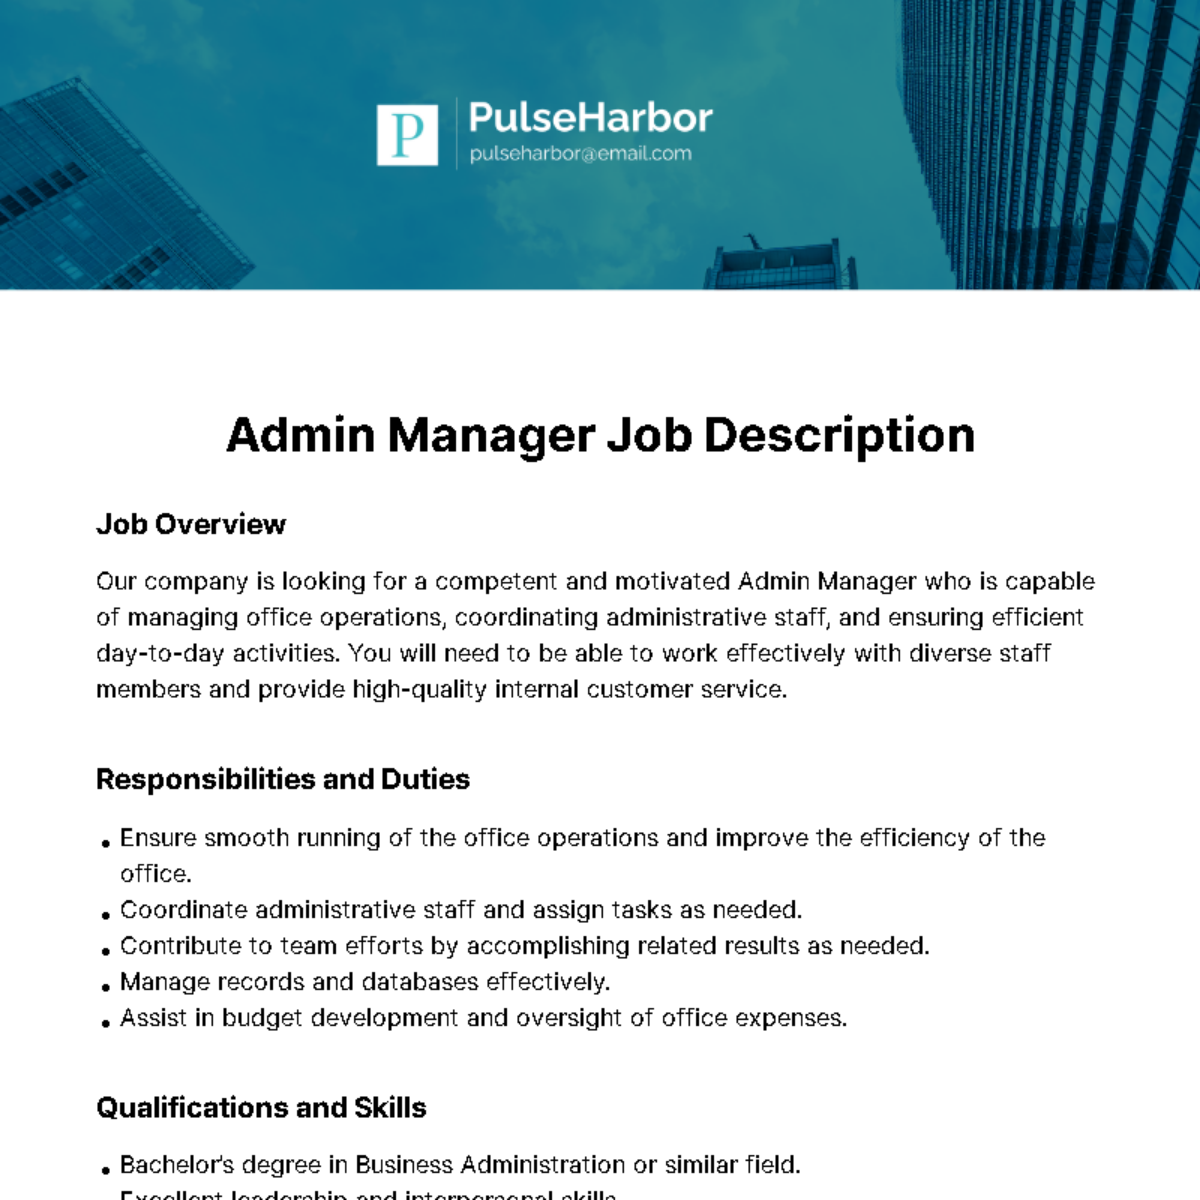 Admin Manager Job Description Template